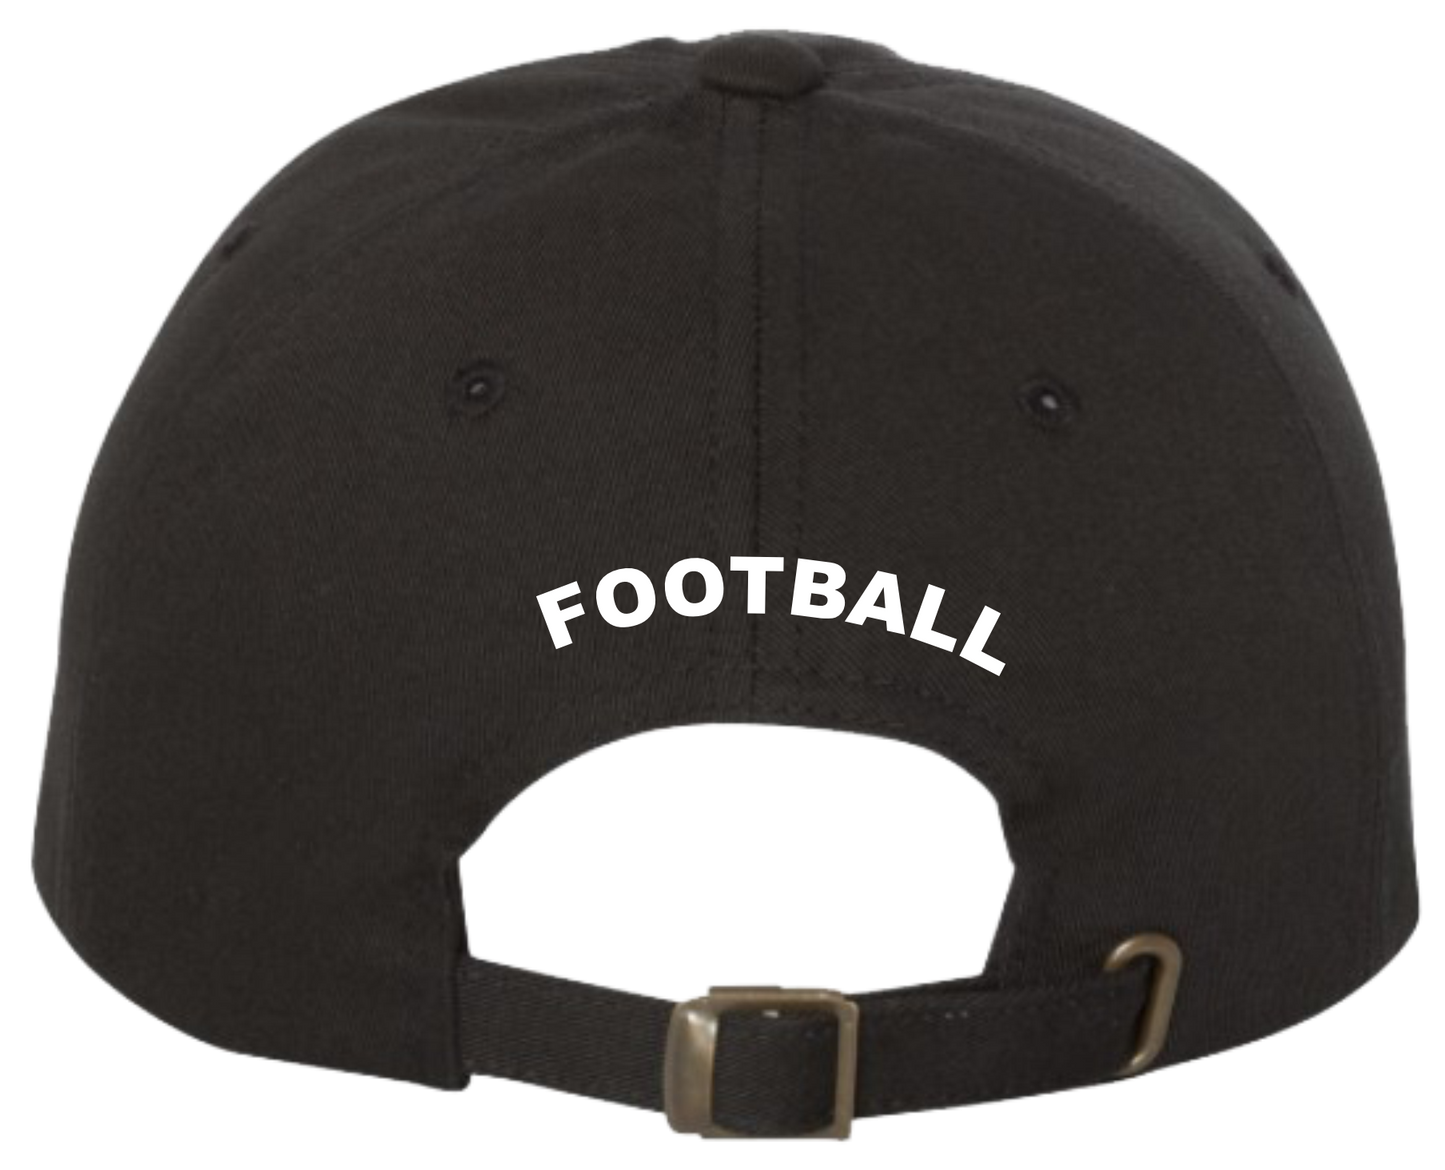 Mount Doug Rams Football Yupoong Classic Dad Hat